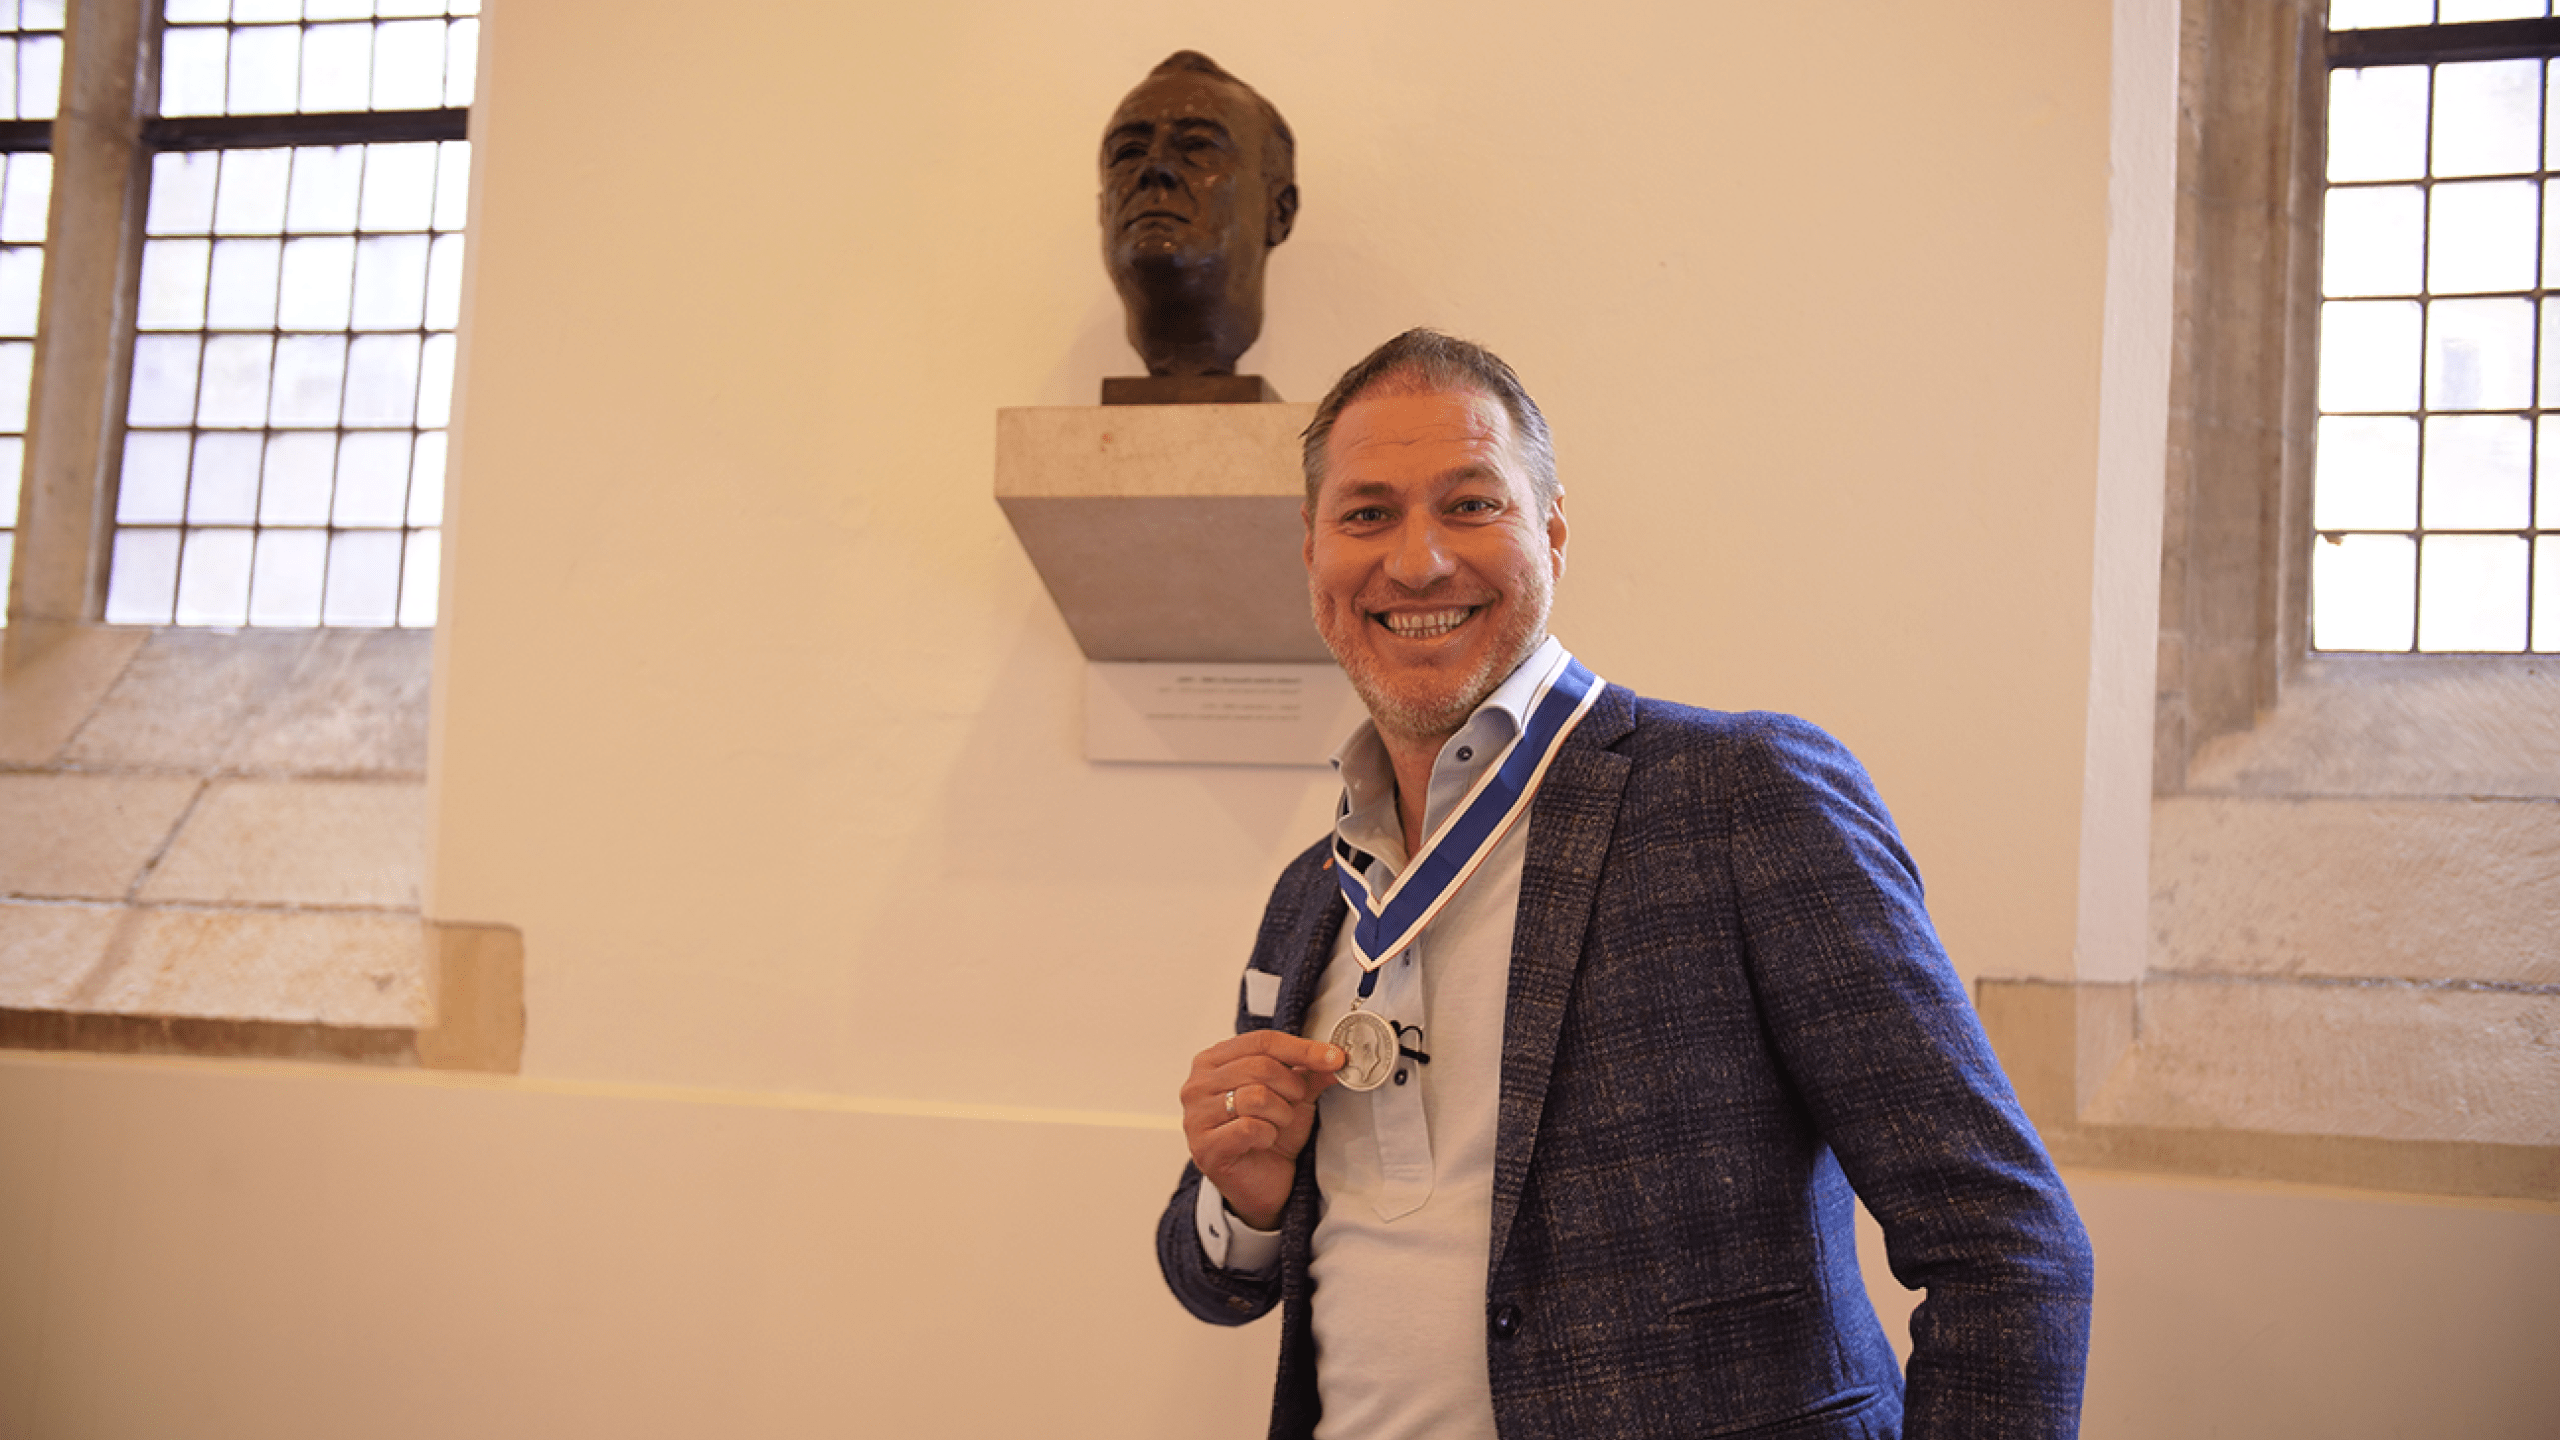 Sander de Kramer in Kapittelzaal met buste Roosevelt en medal